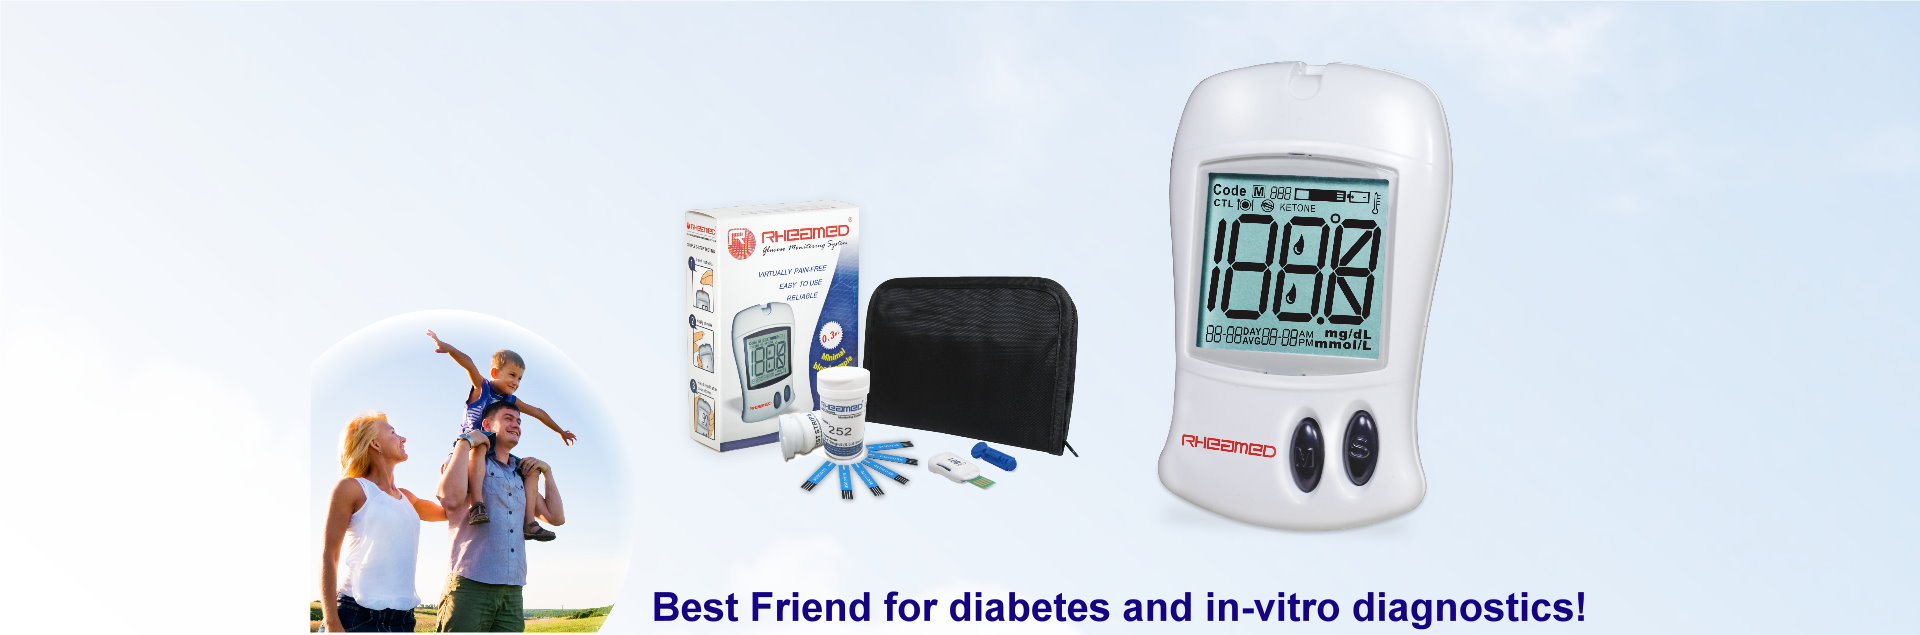 Best Friend for diabetes and in-vitro diagnostics!